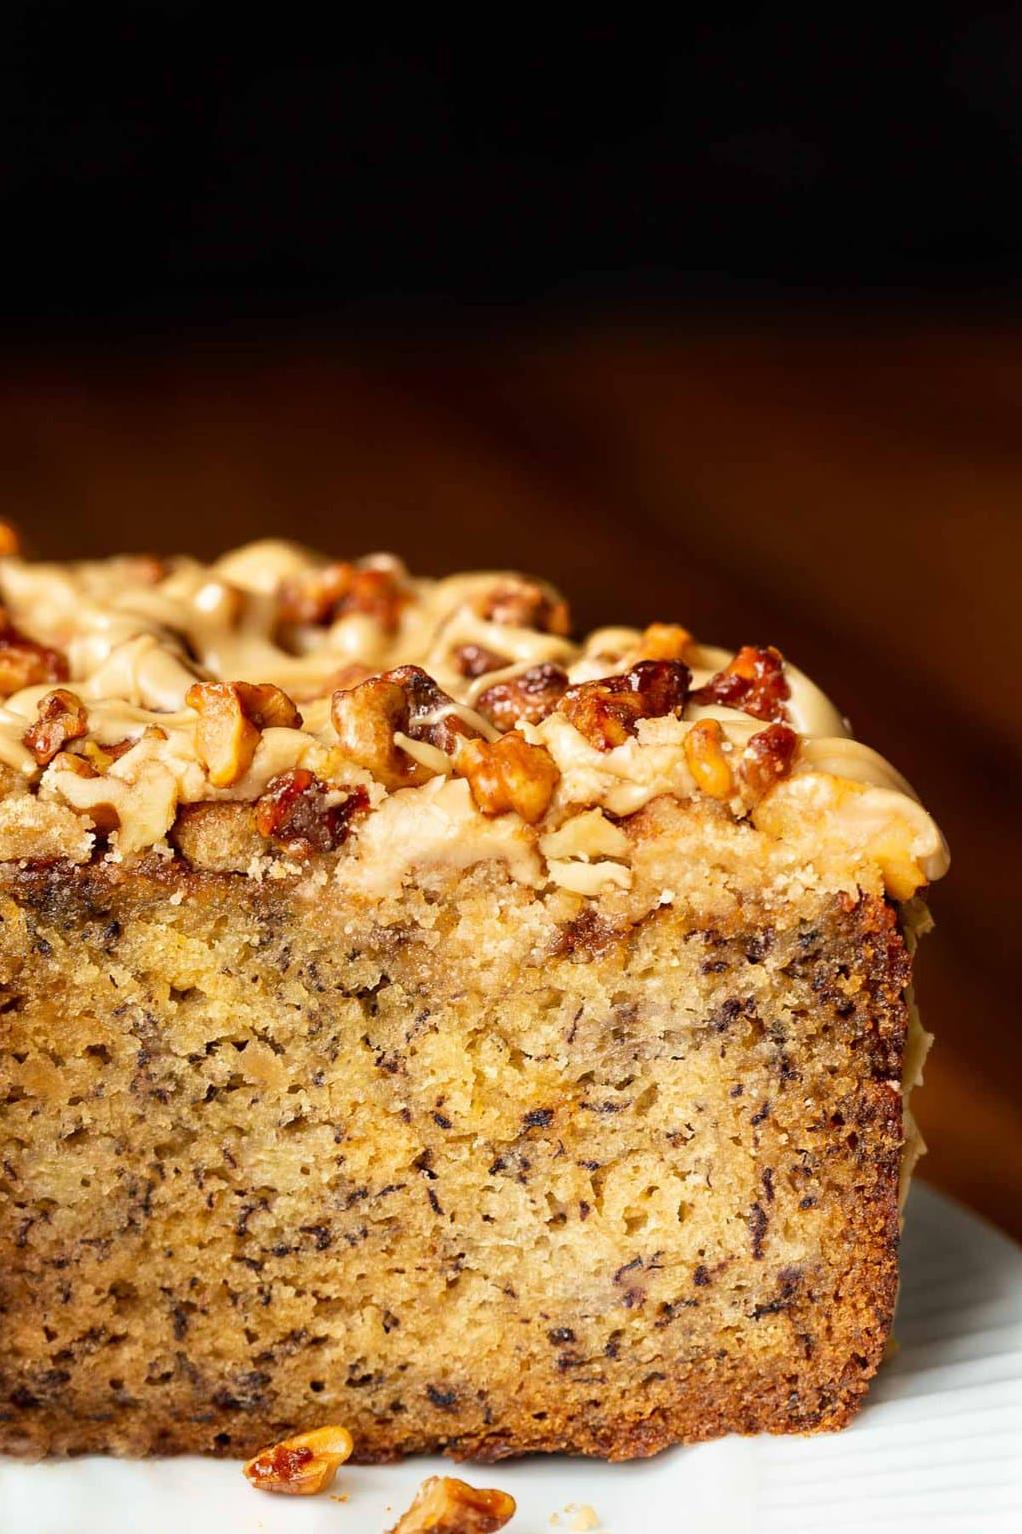  Wake up to the aroma of freshly baked banana walnut coffee cake.